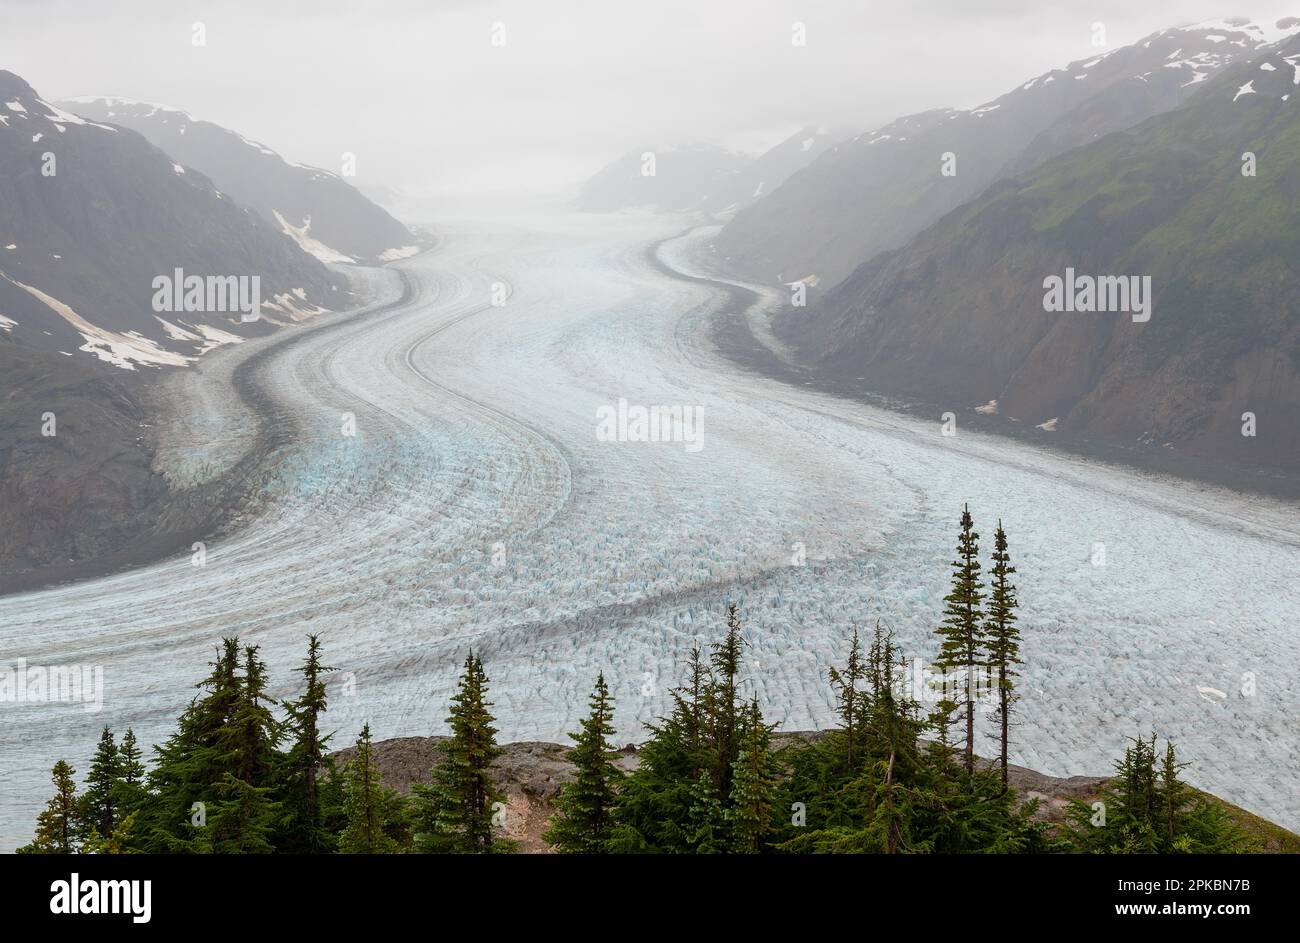 Salmon glacier and pine trees in mist, British Columbia, Canada. Stock Photo